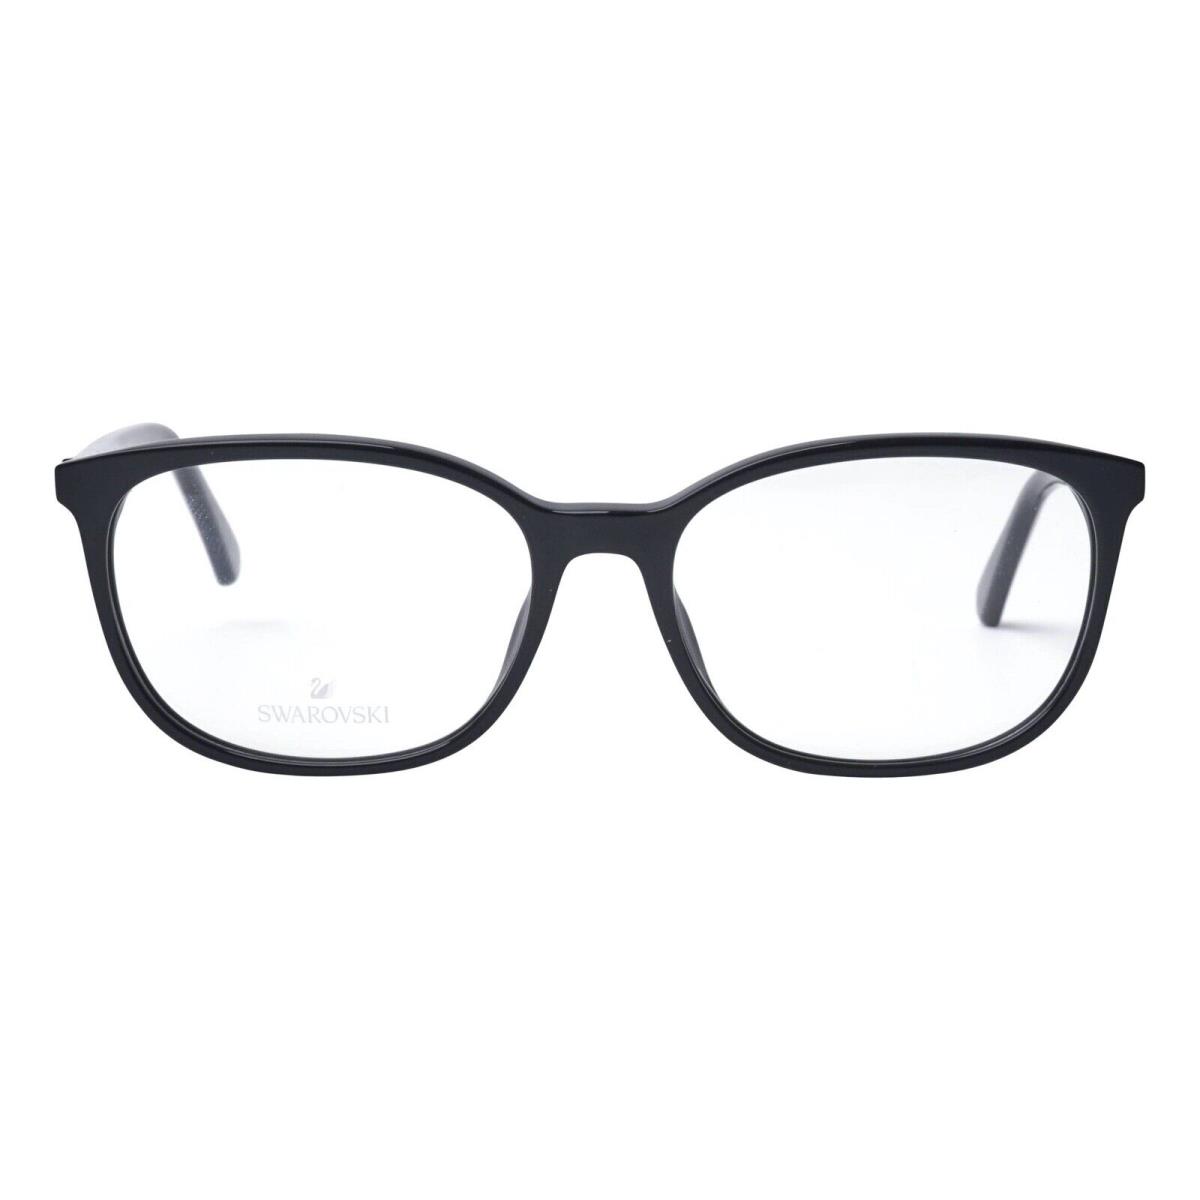 Swarovski SW 5300-F 001 Black Plastic Eyeglasses Frame 54-16-140 5300F Asian Fit